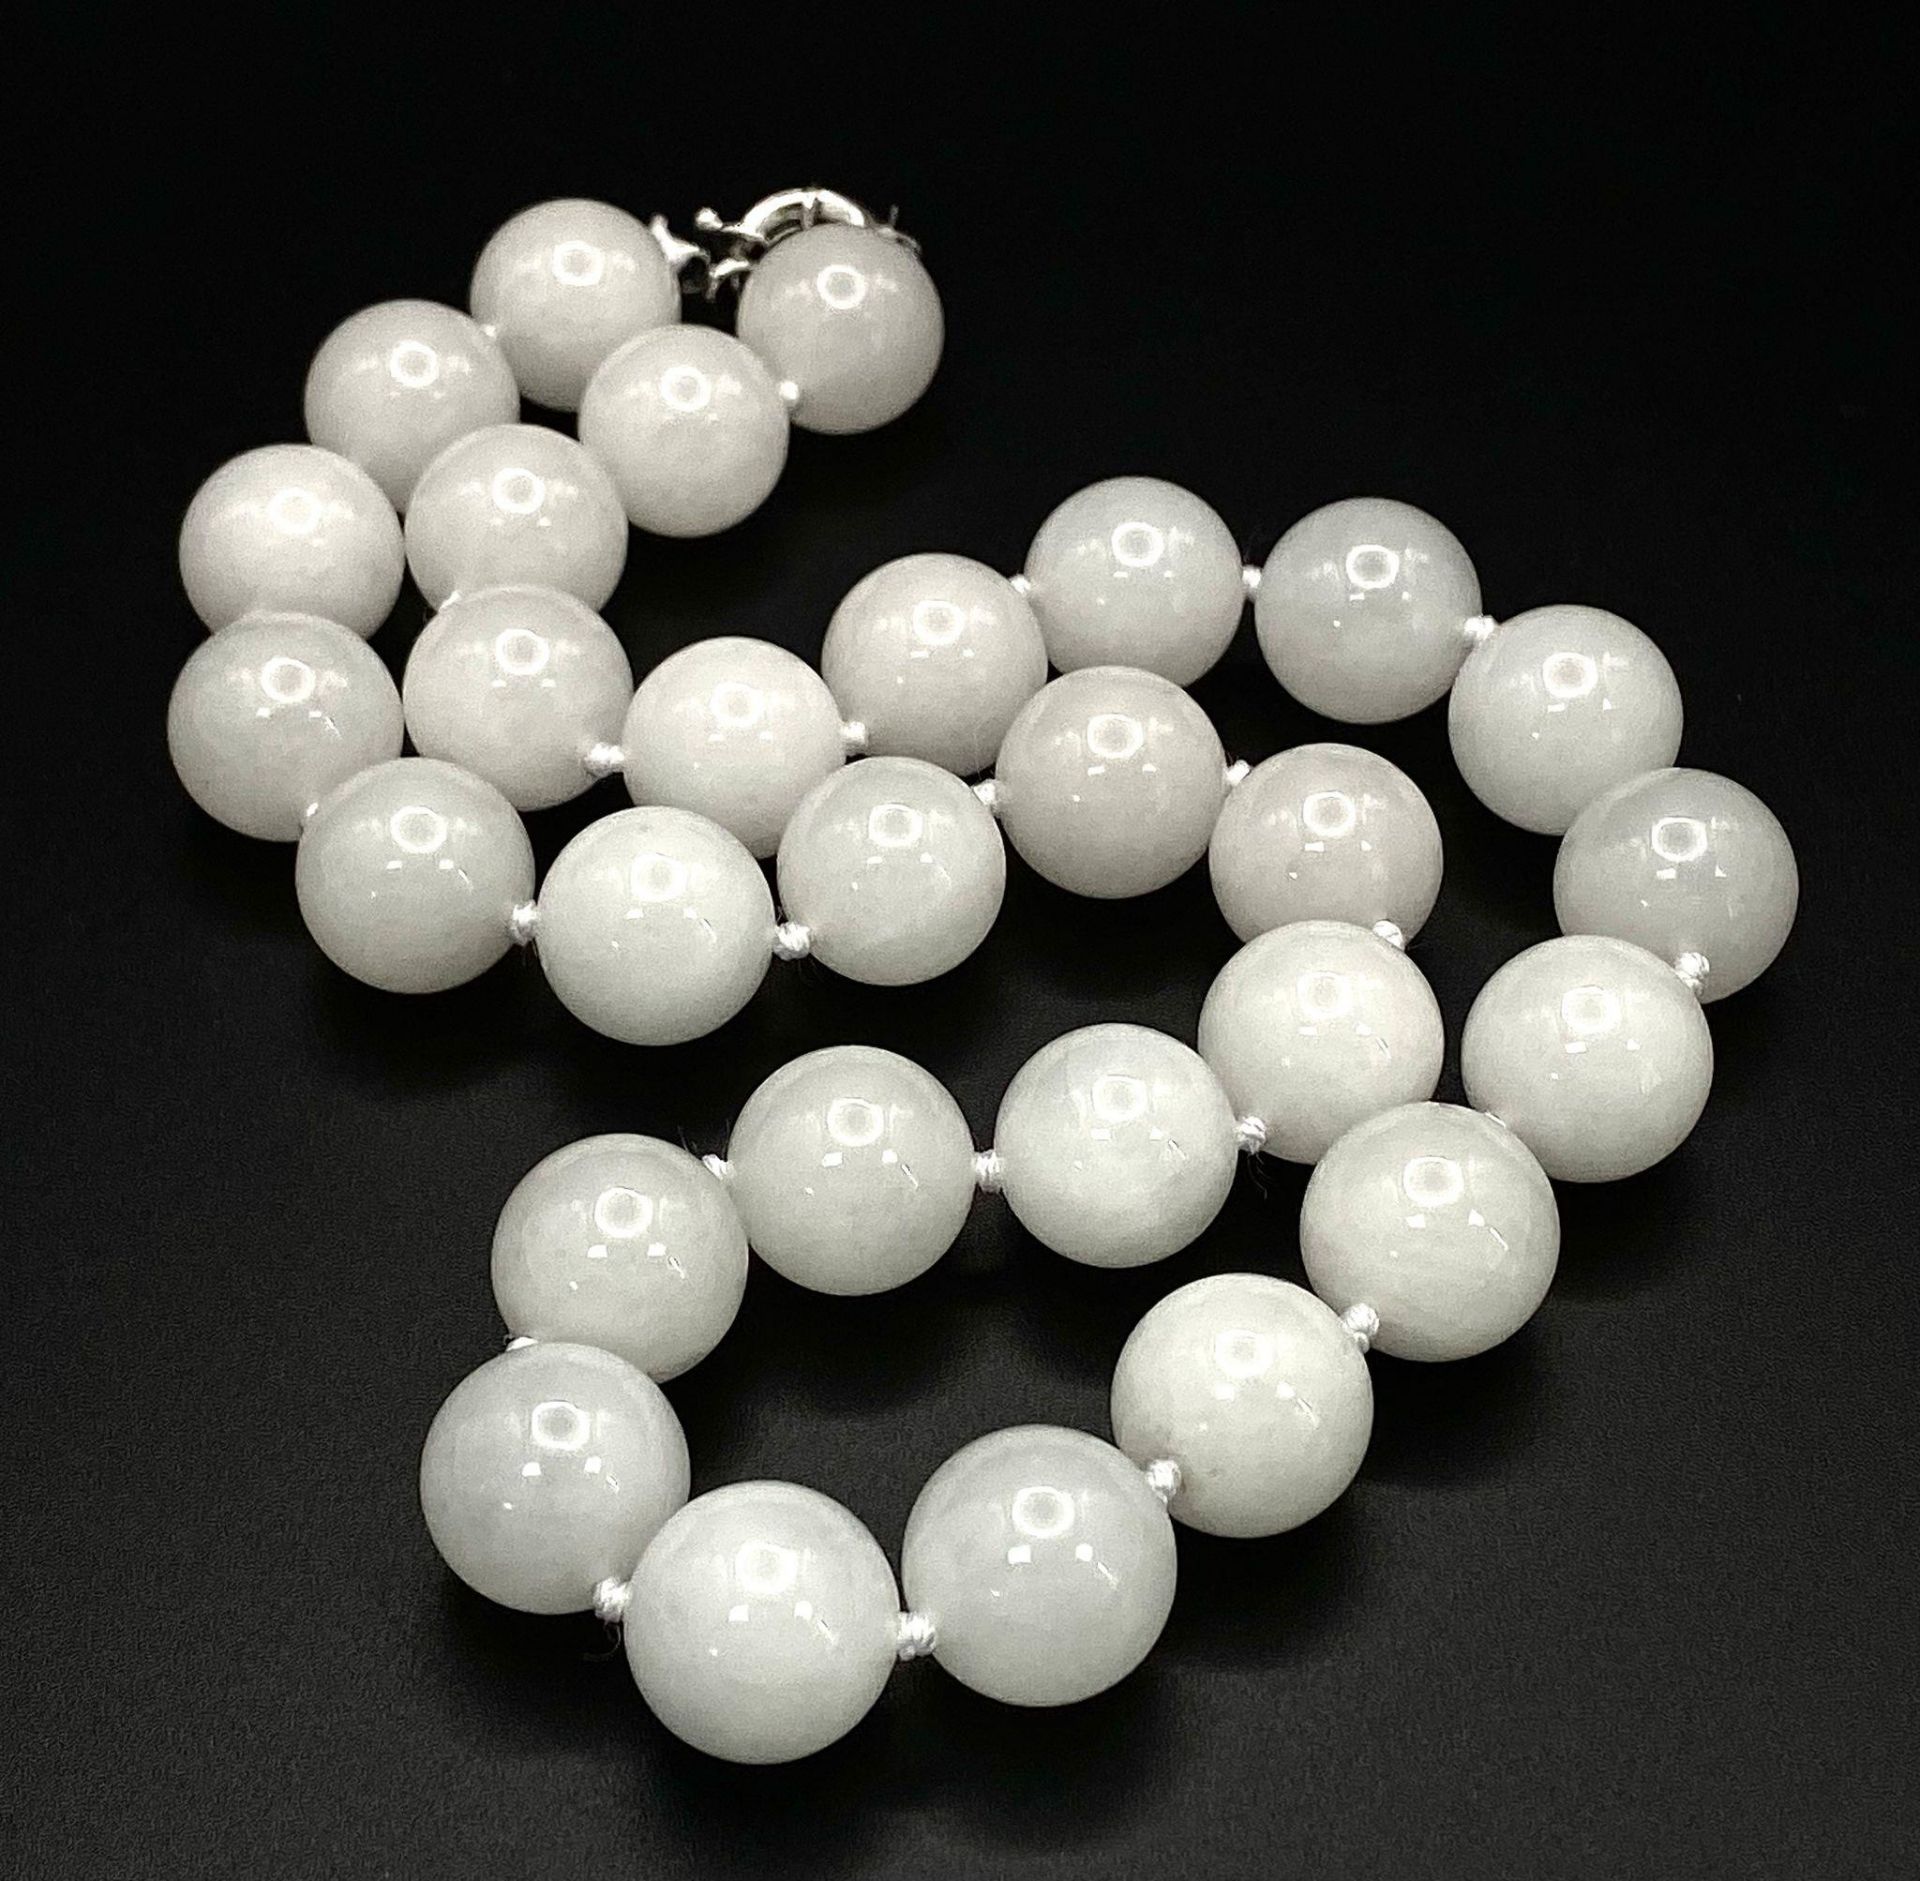 A Bright White Jade Bead Necklace. Good sized beads - 14mm. 42cm necklace length. Lifesaver clasp. - Bild 2 aus 3